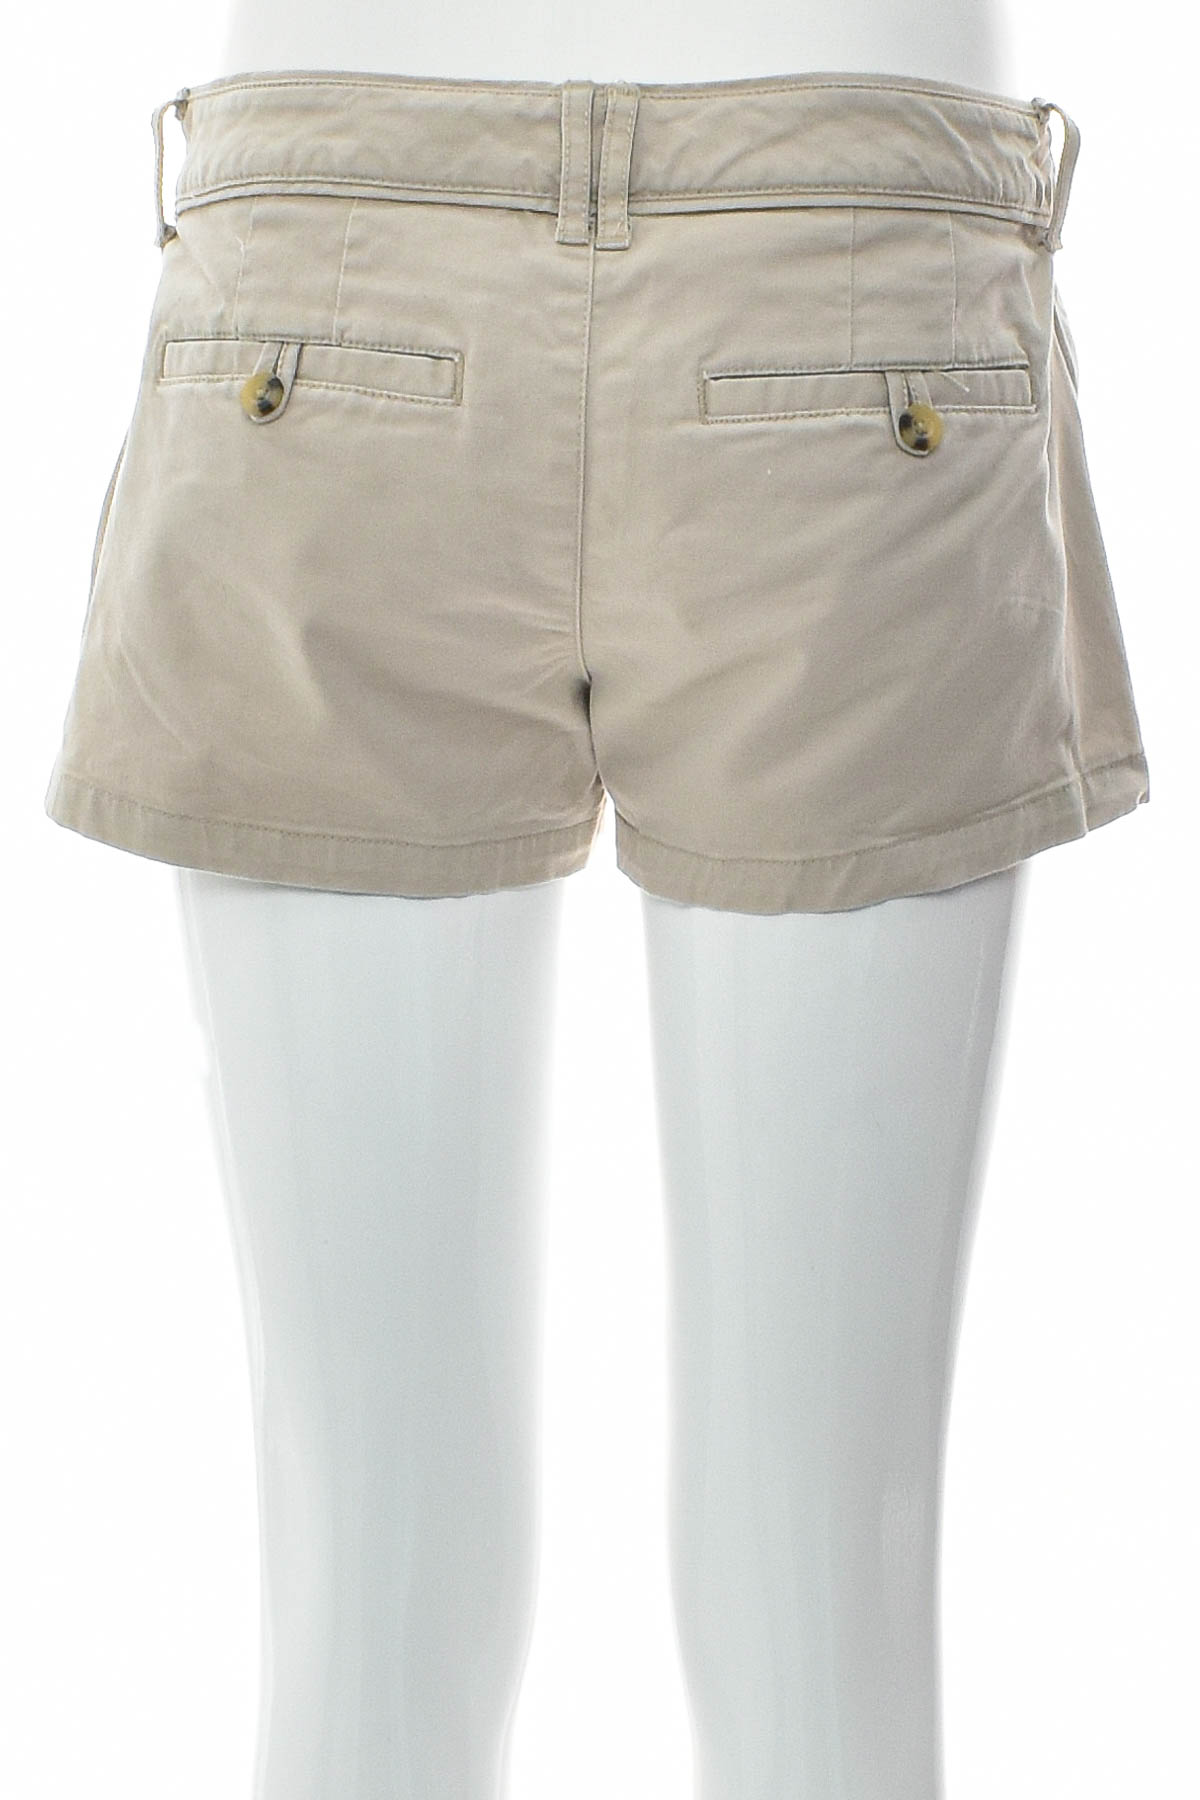 Female shorts - ARIZONA JEAN CO - 1